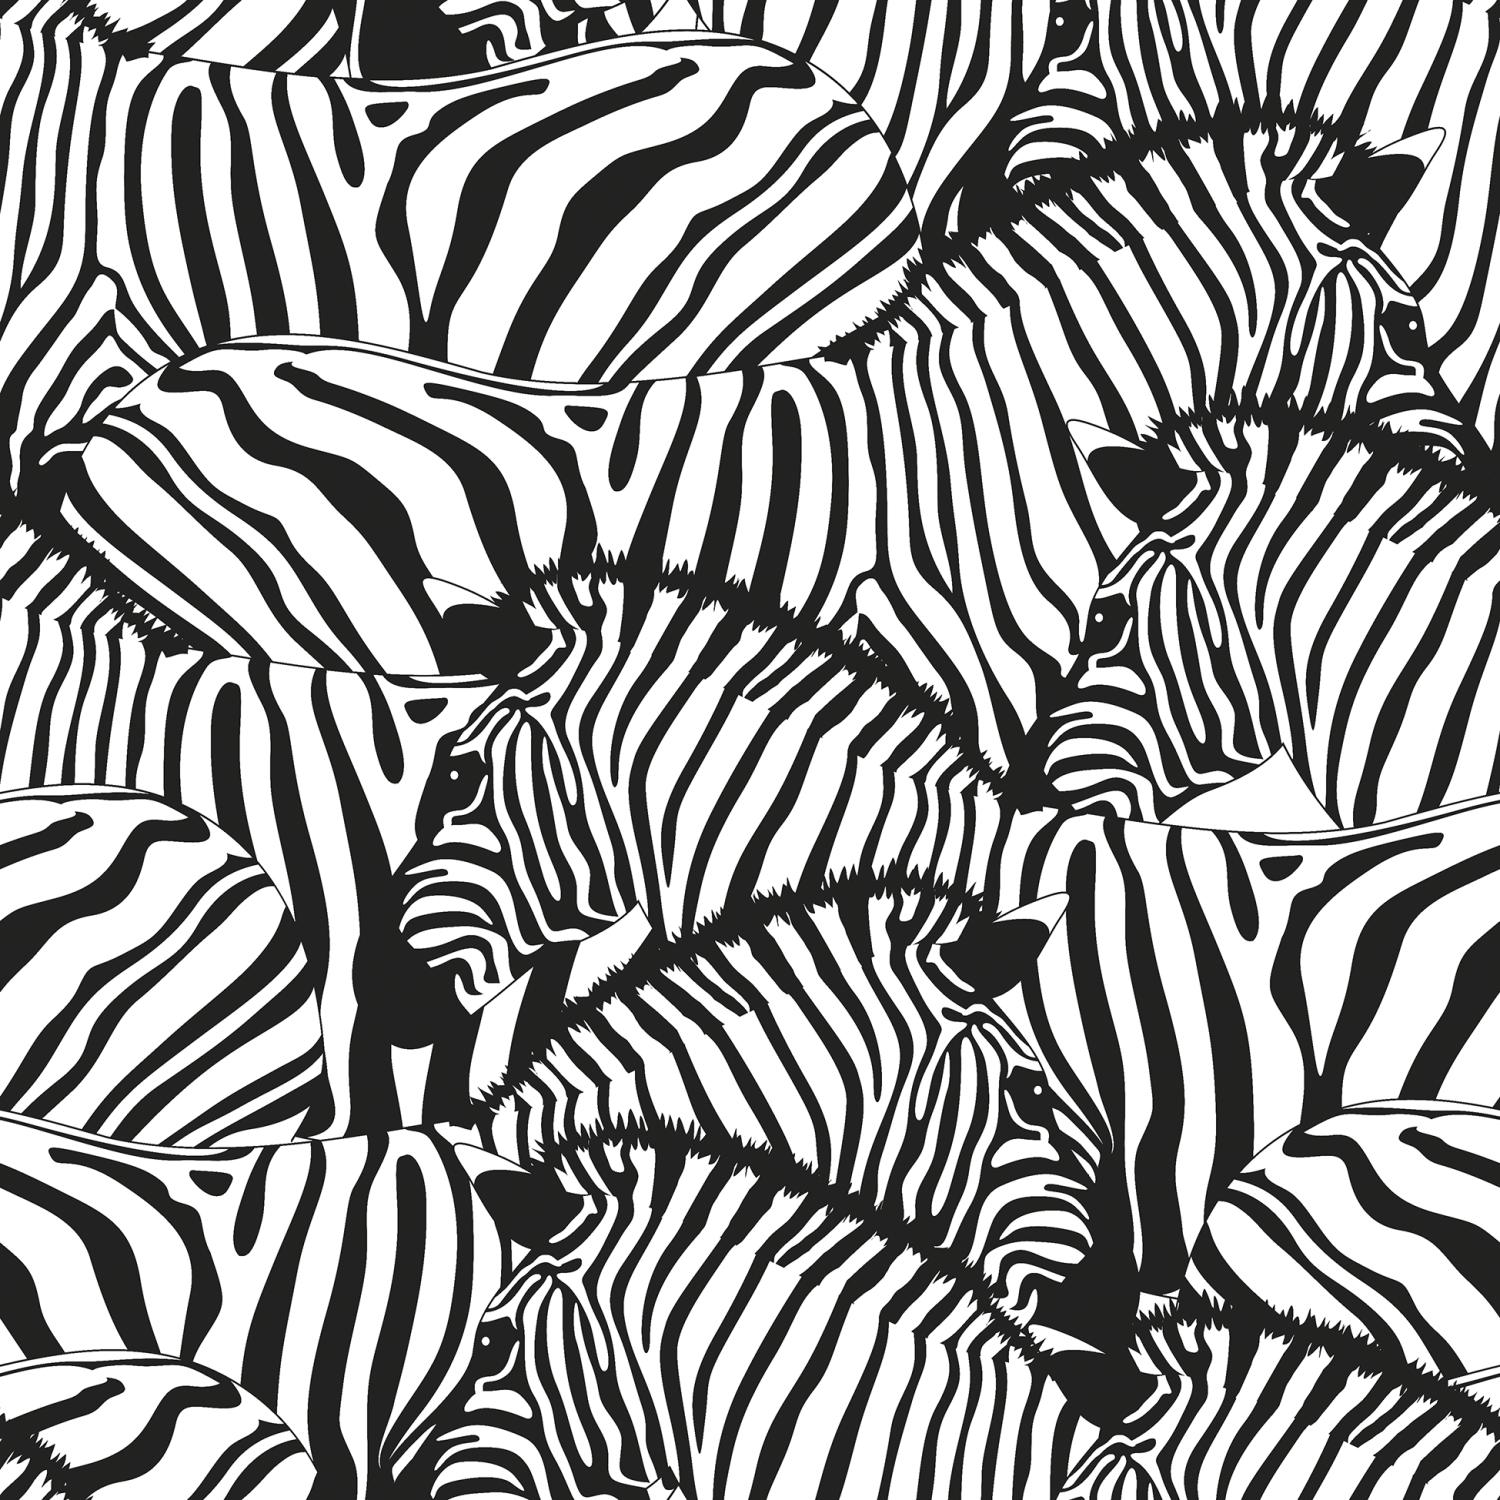 Servett Zebra